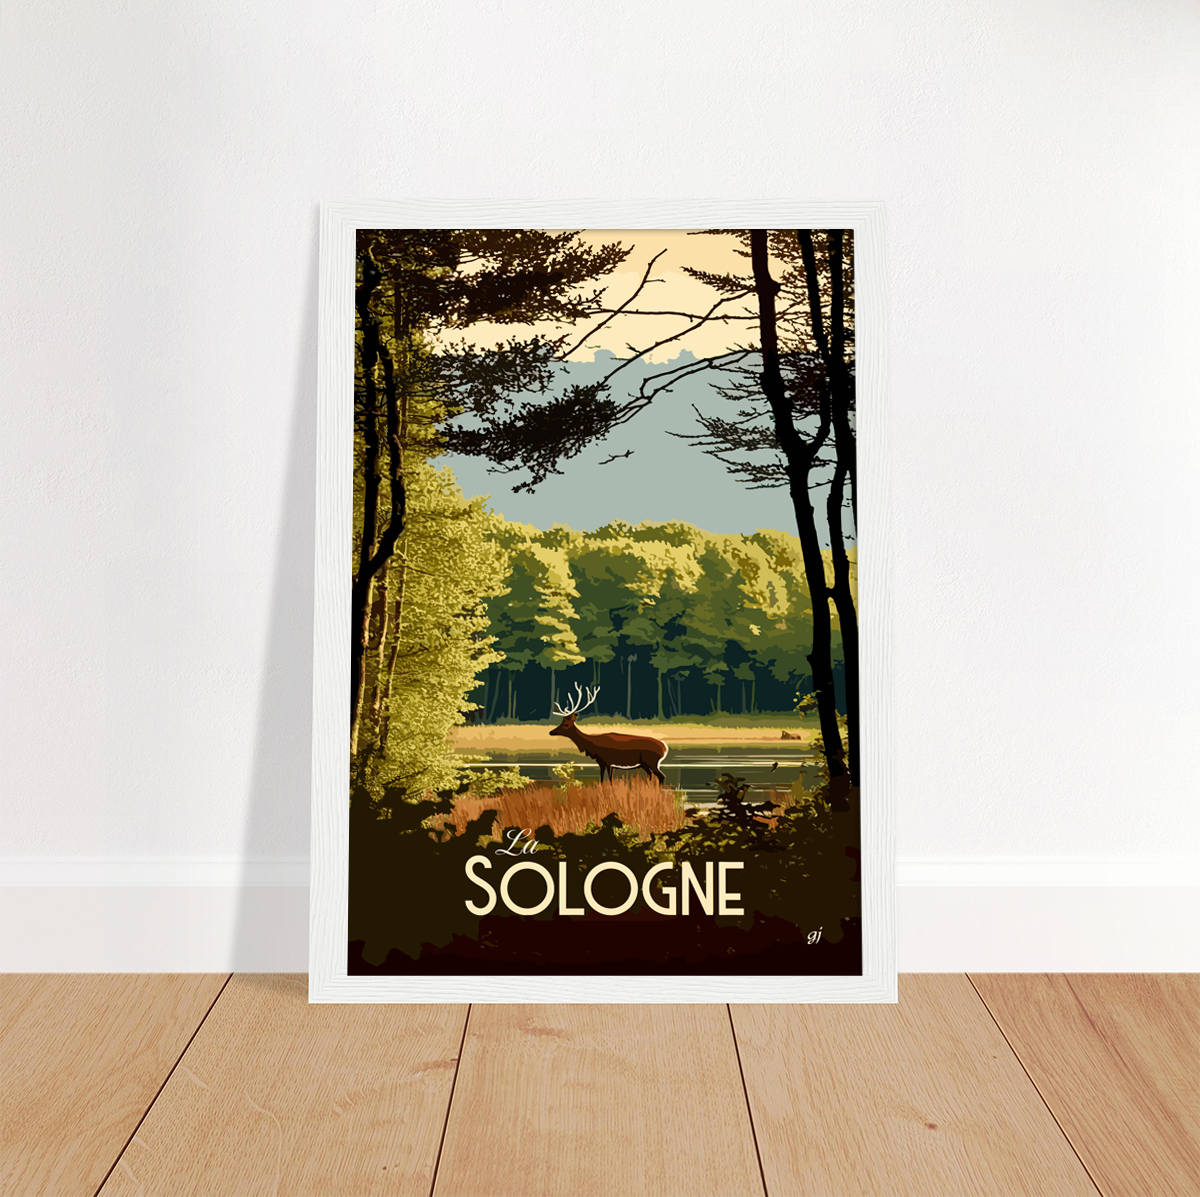 Sologne poster by bon voyage design